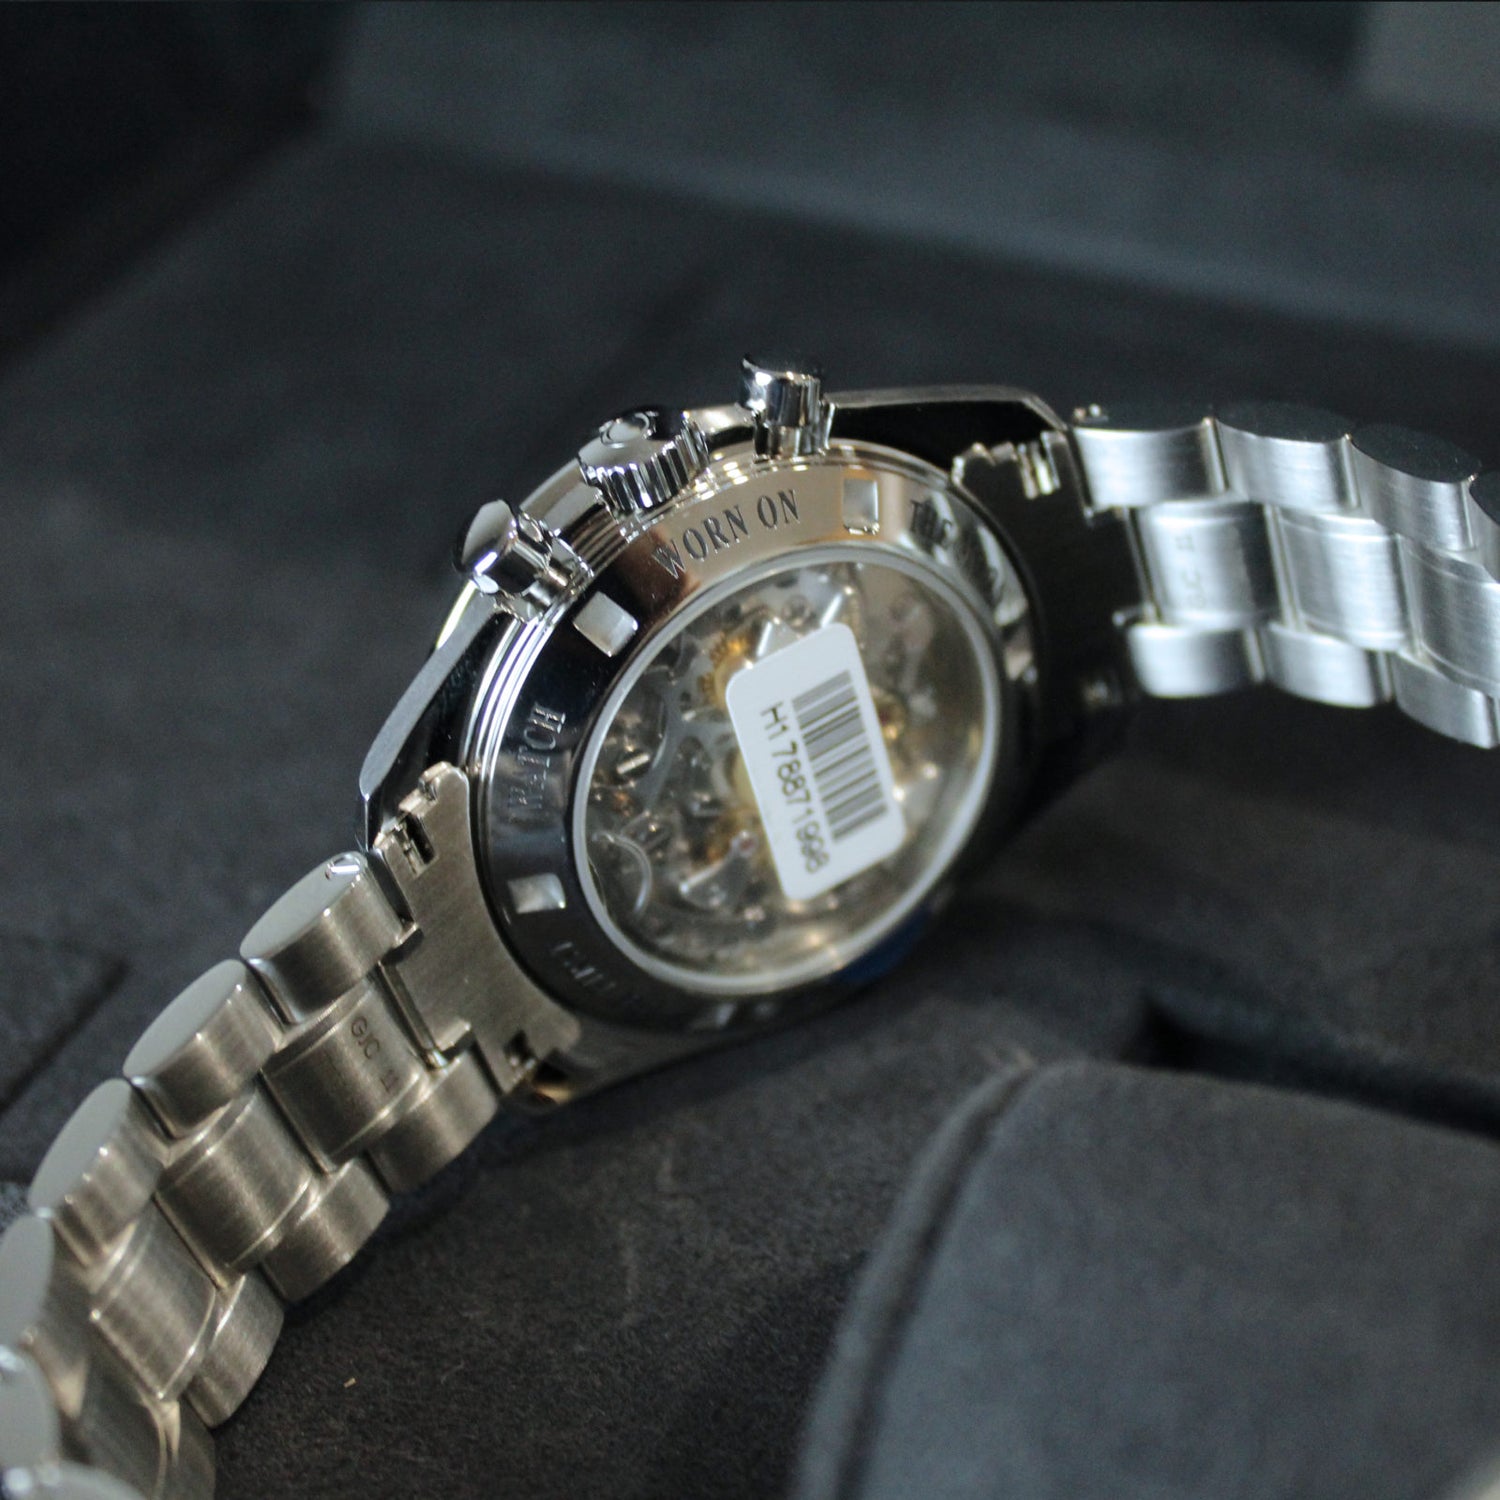 Omega Speedmaster Moonwatch Professional Chronograph 42mm - 311.30.42.30.01.006